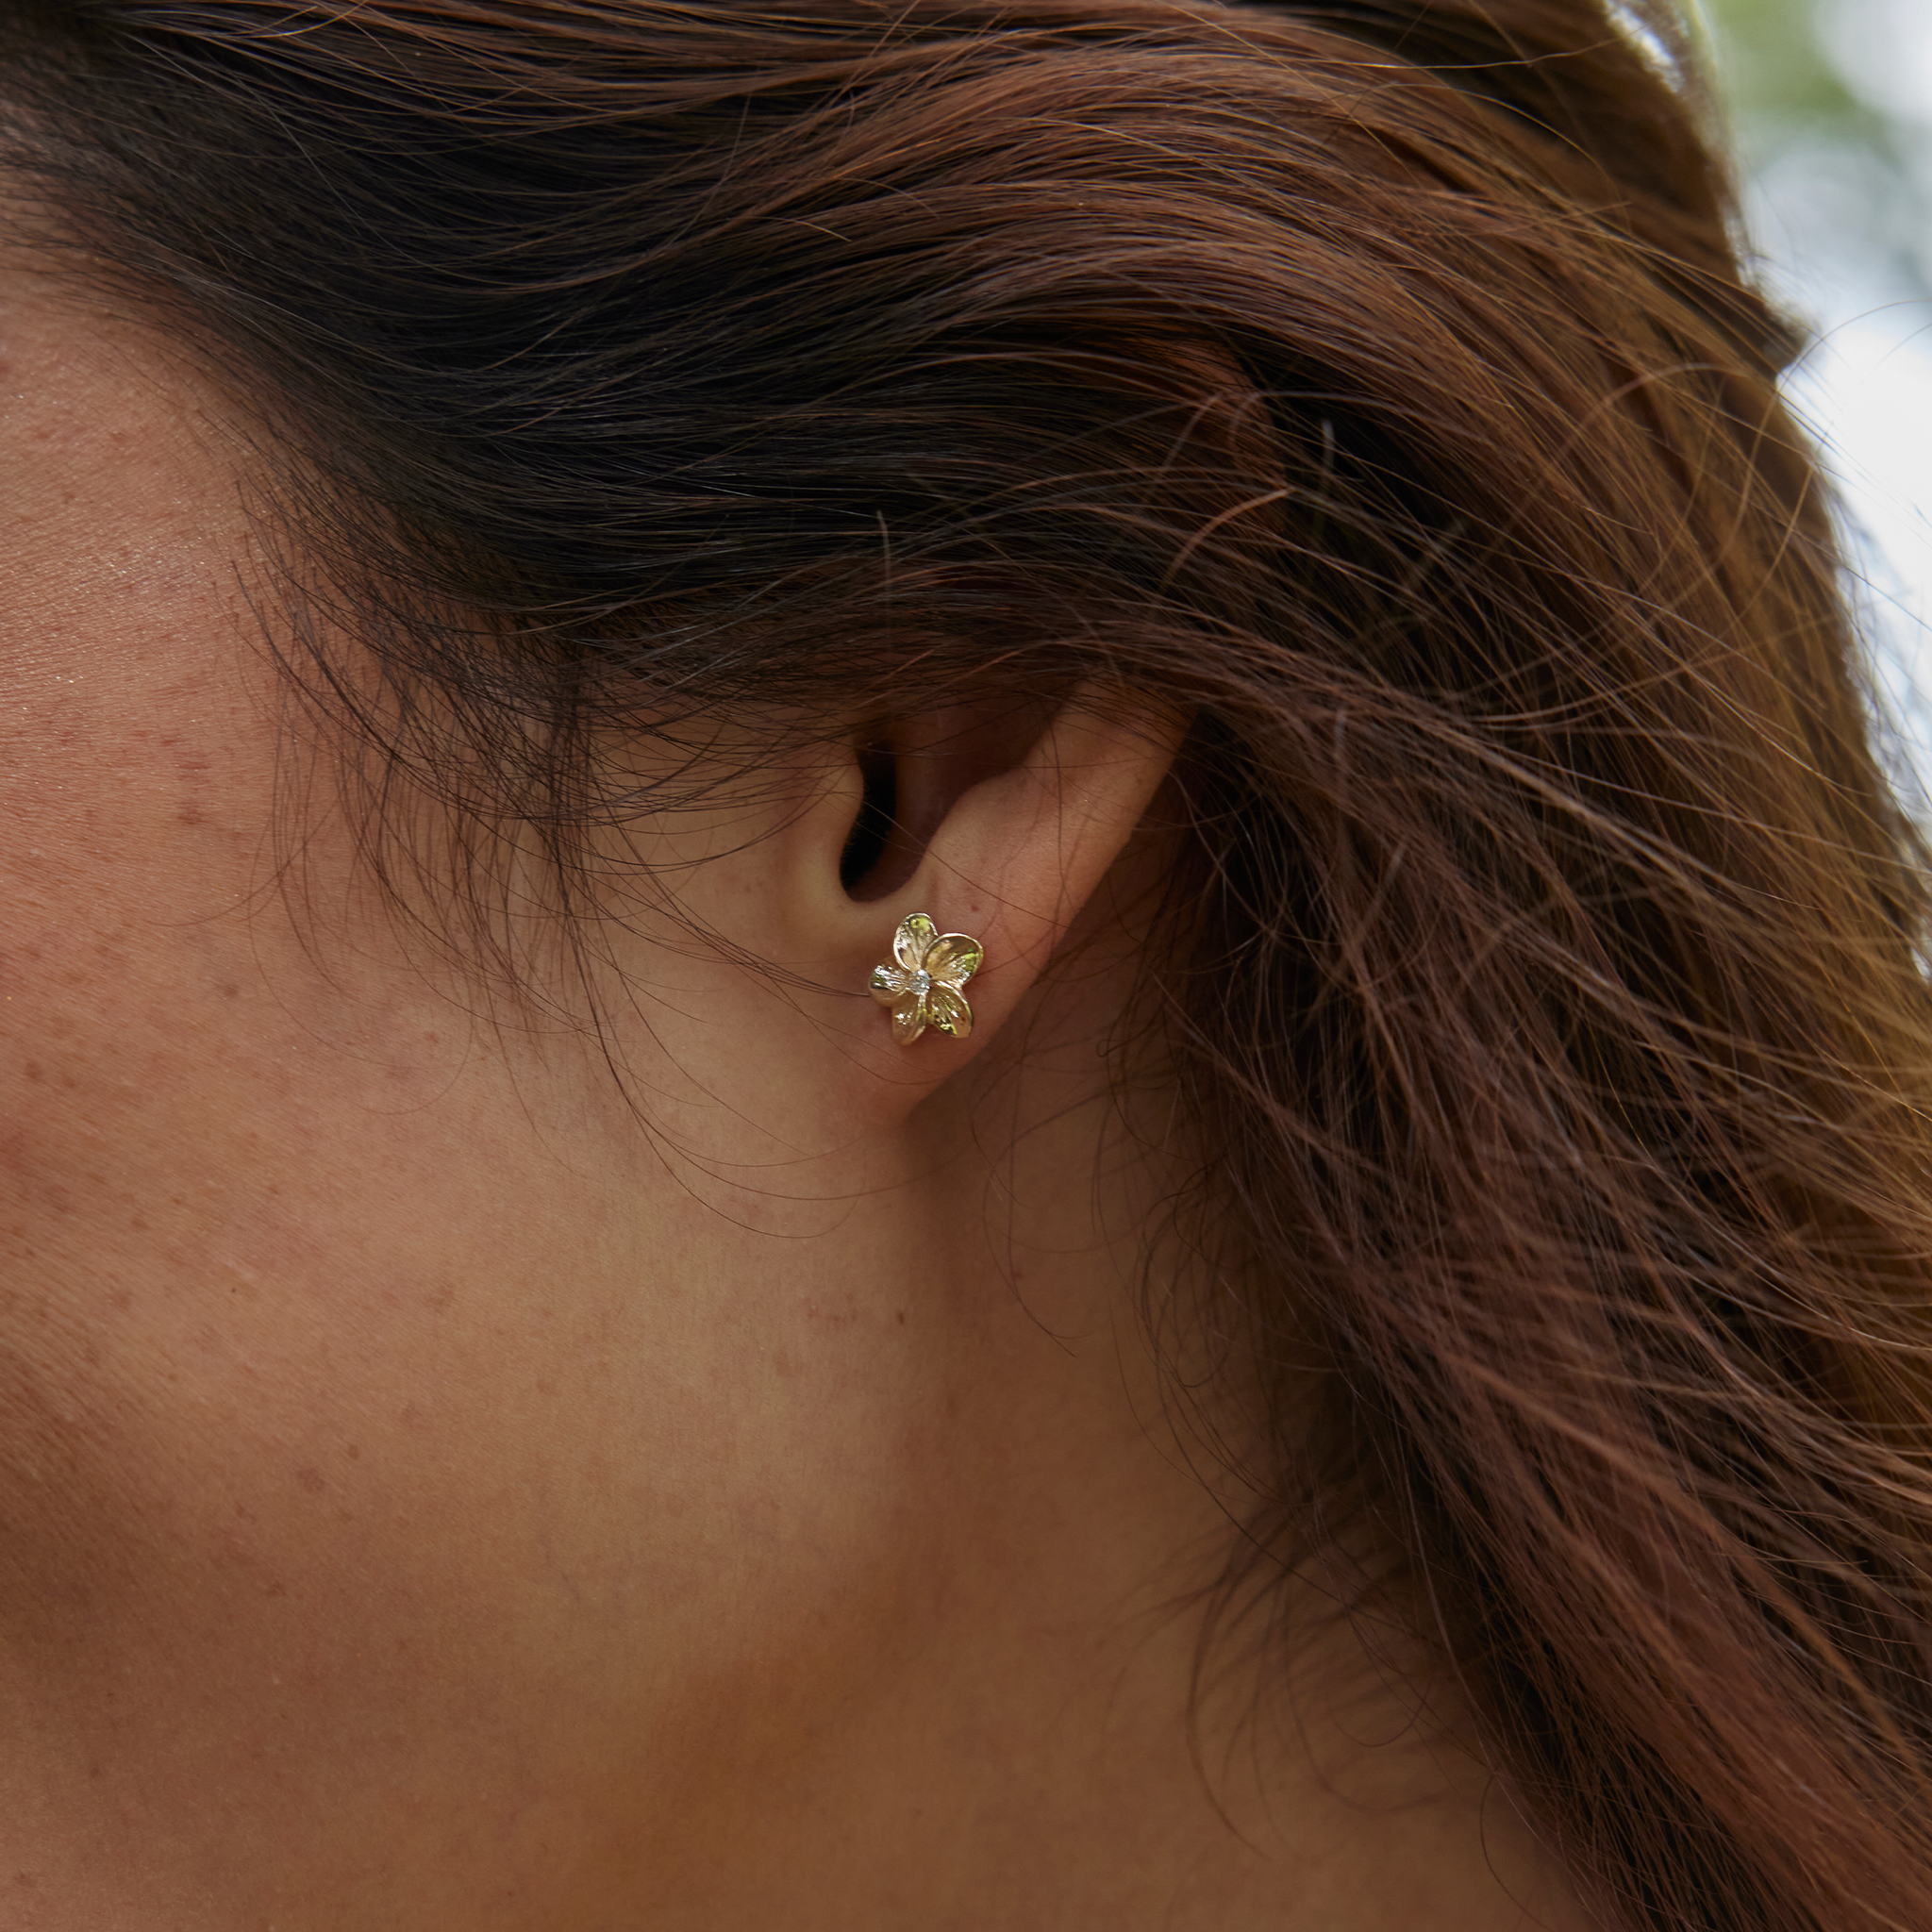 Hawaiian Heirloom Plumeria Earrings in Gold with Diamonds - 9mm